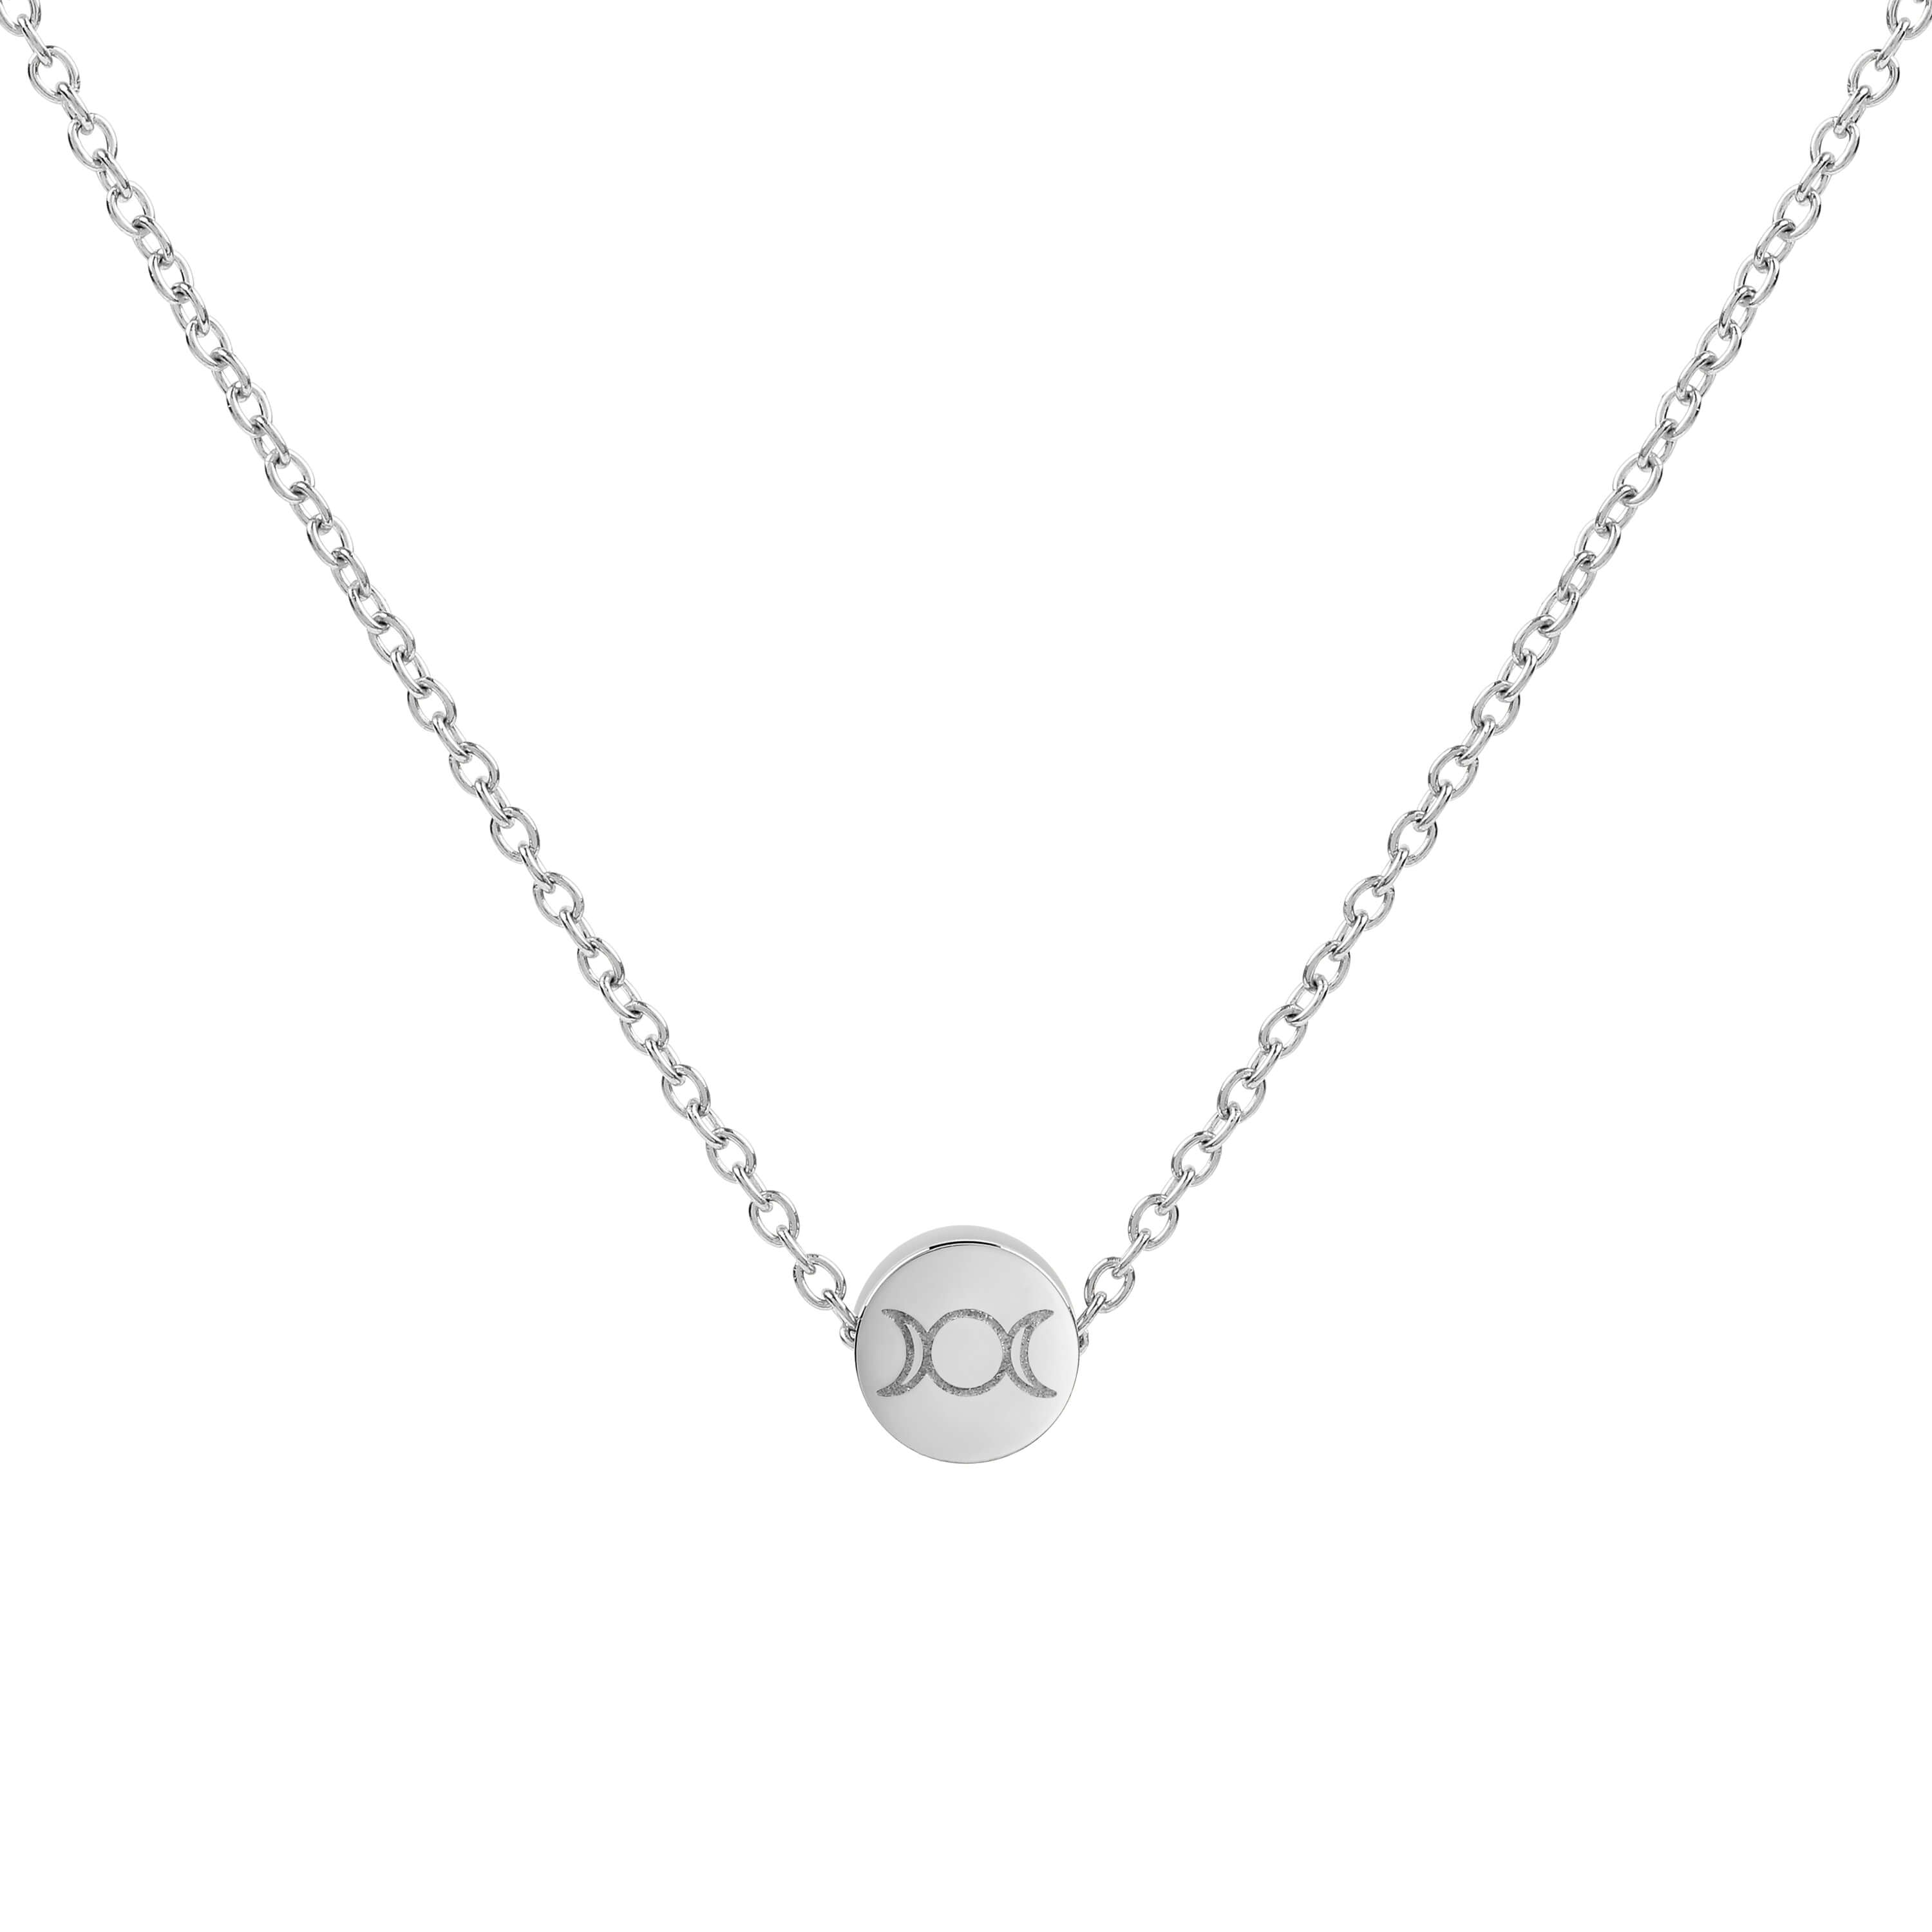 Triple Goddess Mini Pendant Necklace - 925 Sterling Silver